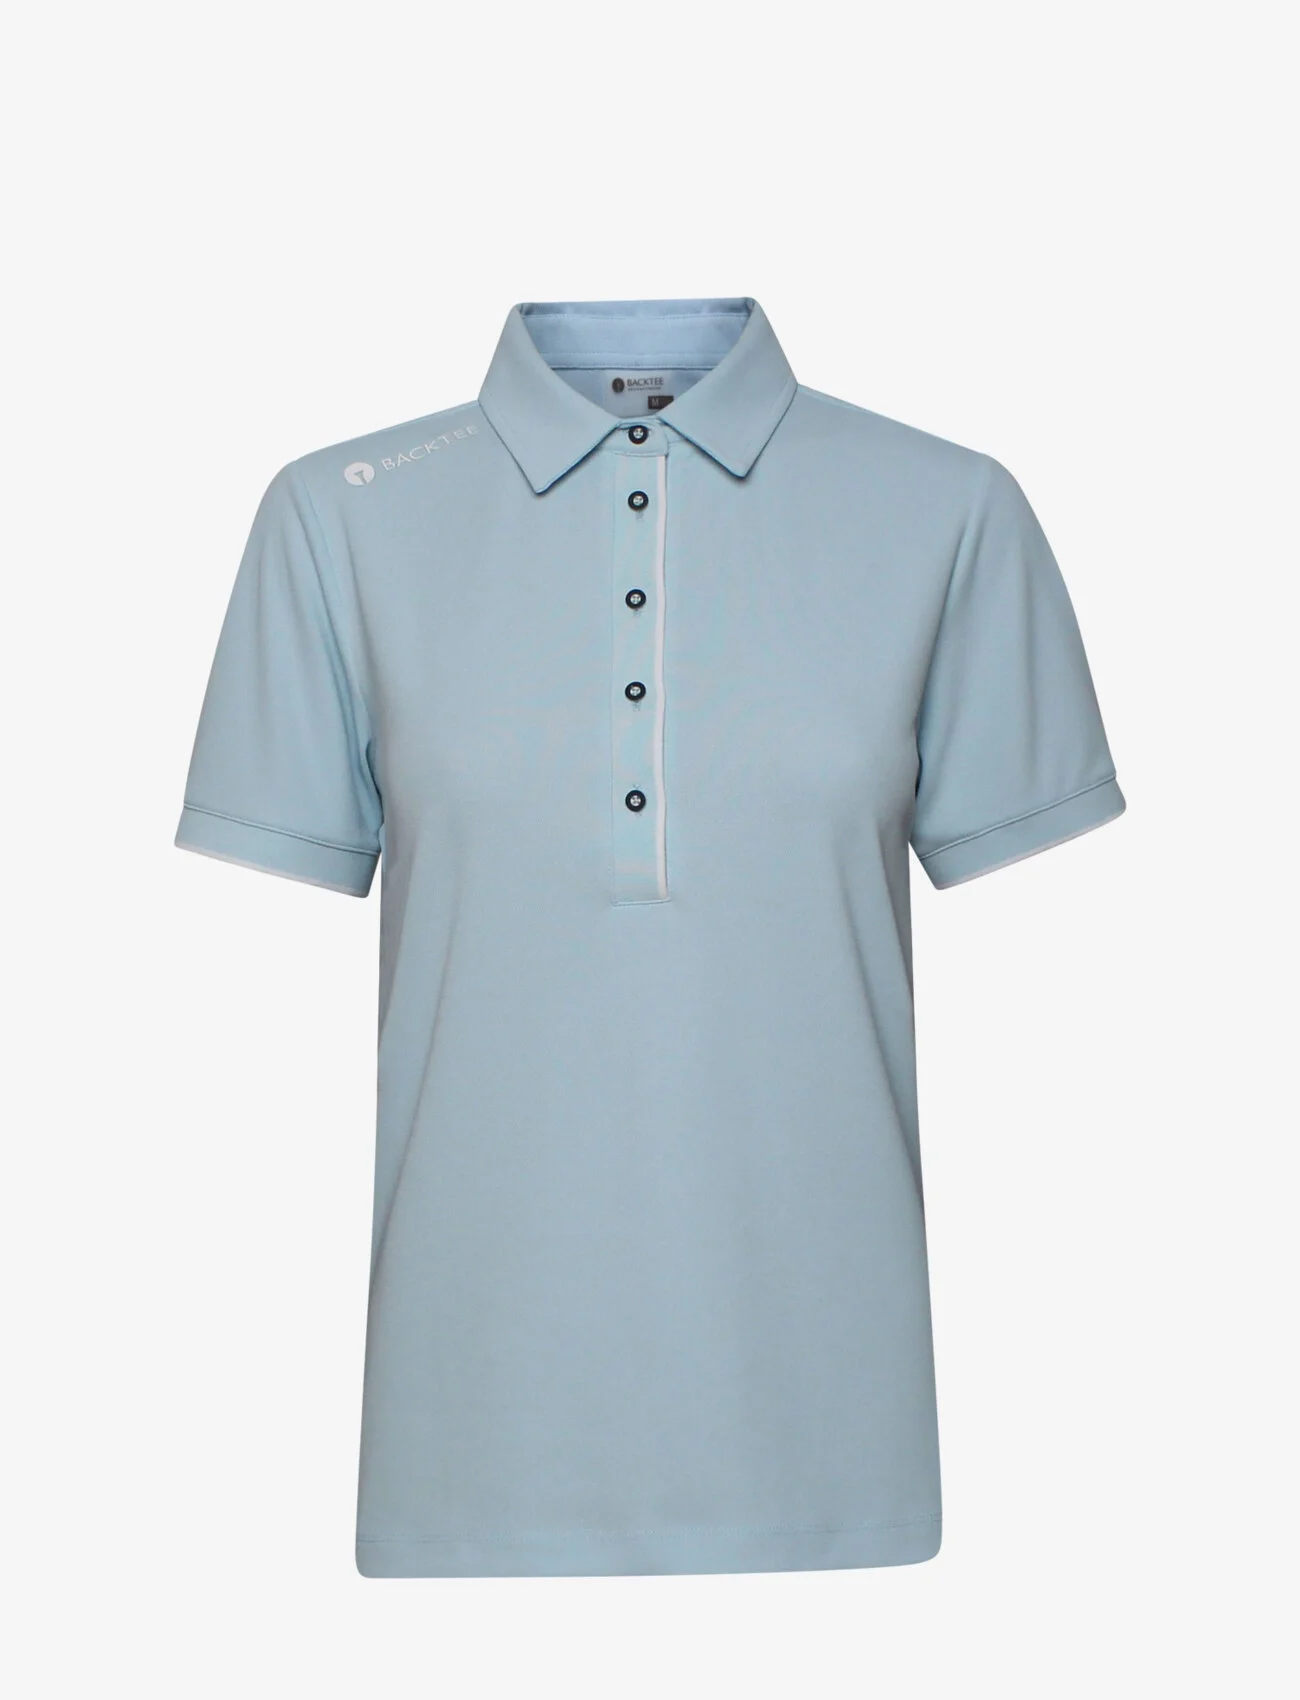 BACKTEE - Ladies Classic Polo - koszulki polo - light blue - 0